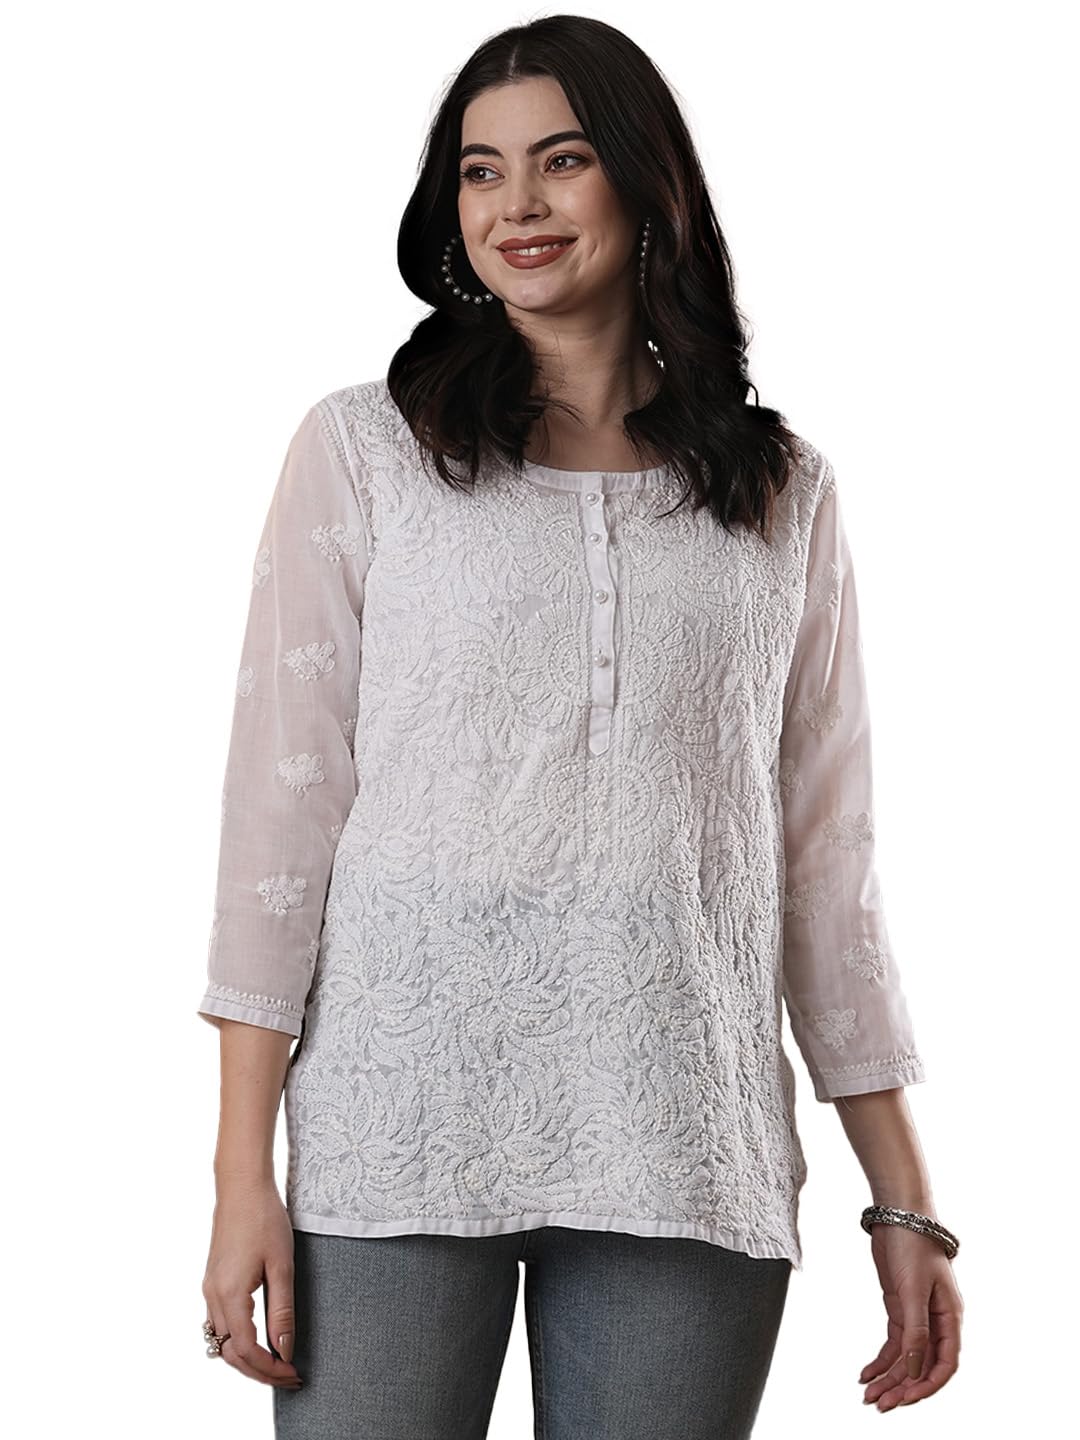 Ada Hand Embroidered Lucknow Chikankari Straight White Cotton Short Kurti Top Tunic for Women A100230 (M)